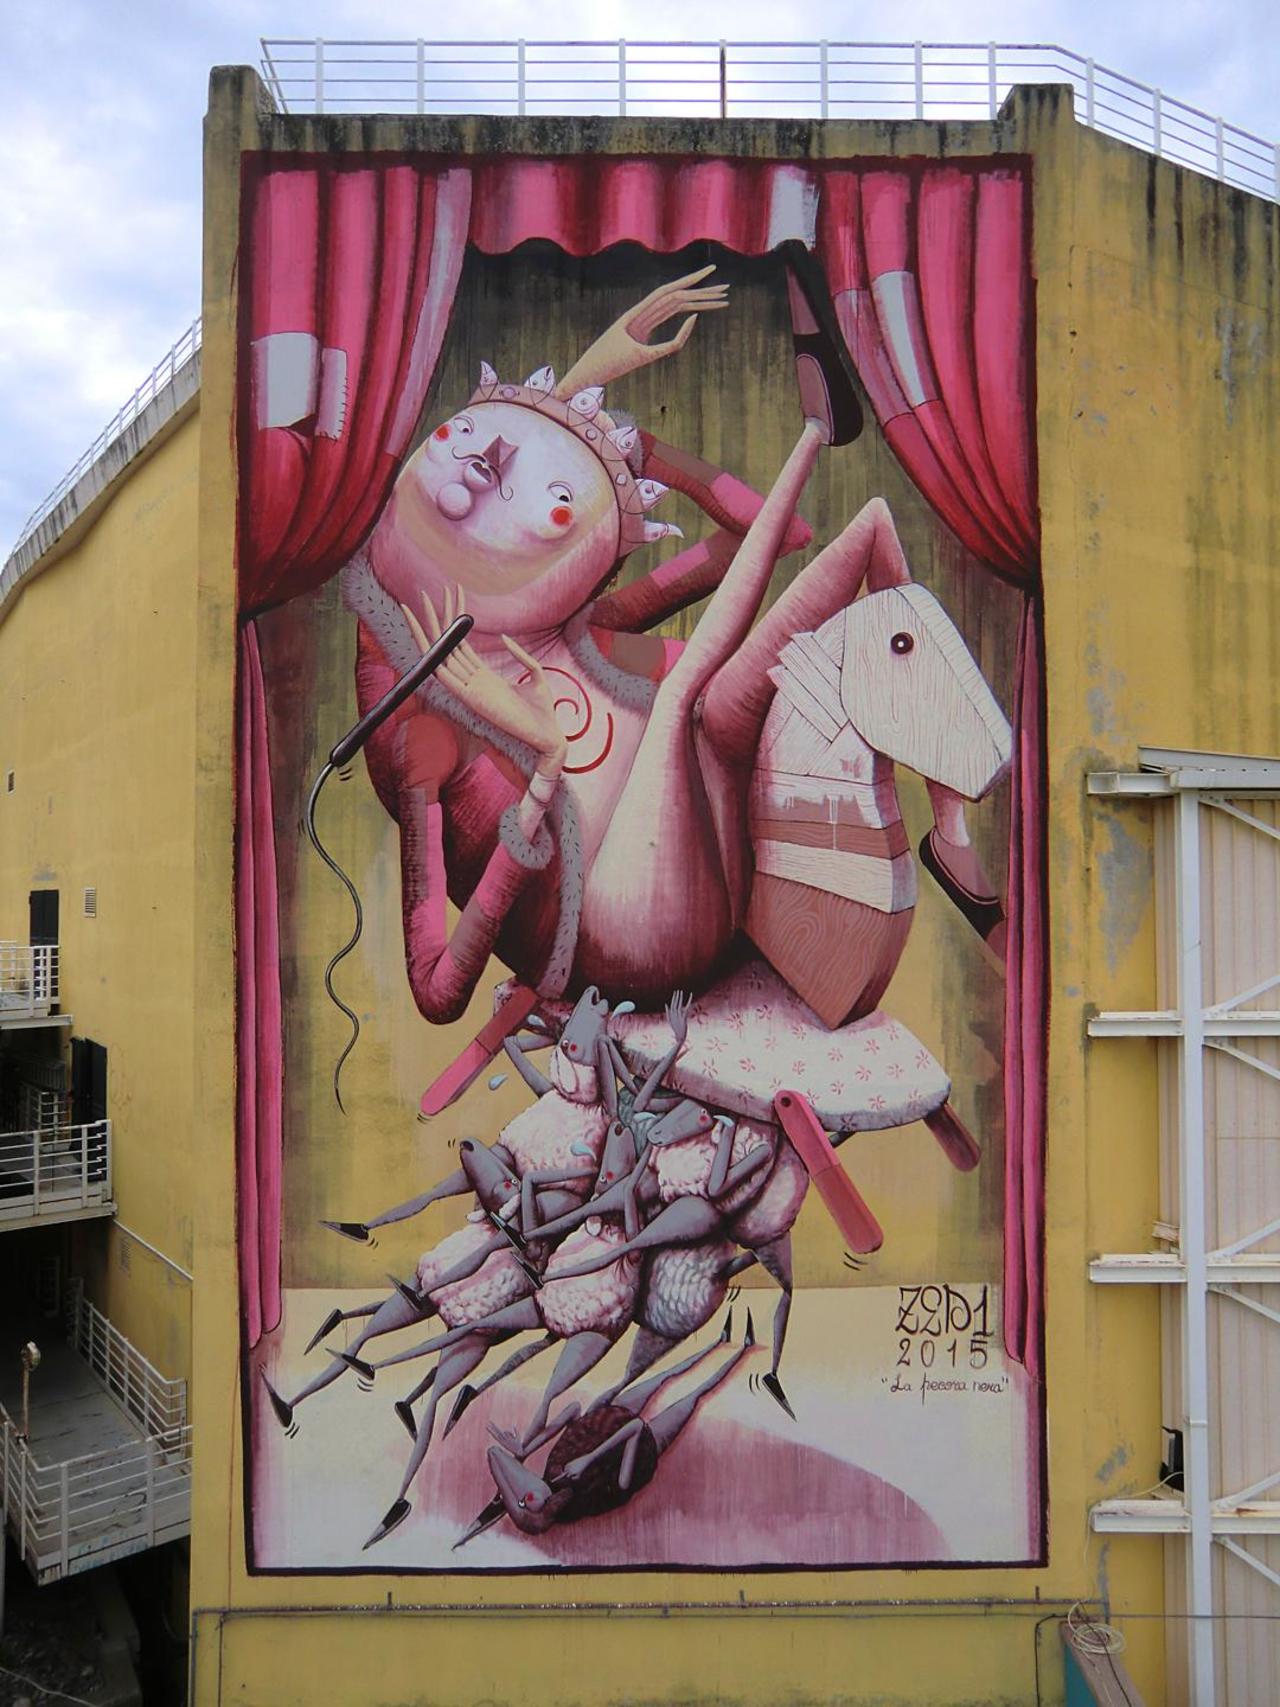 'The Black Sheep', a new mural by ZED1 in Genova, Italy. #StreetArt #Graffiti #Mural http://t.co/GJcgZCpCmg